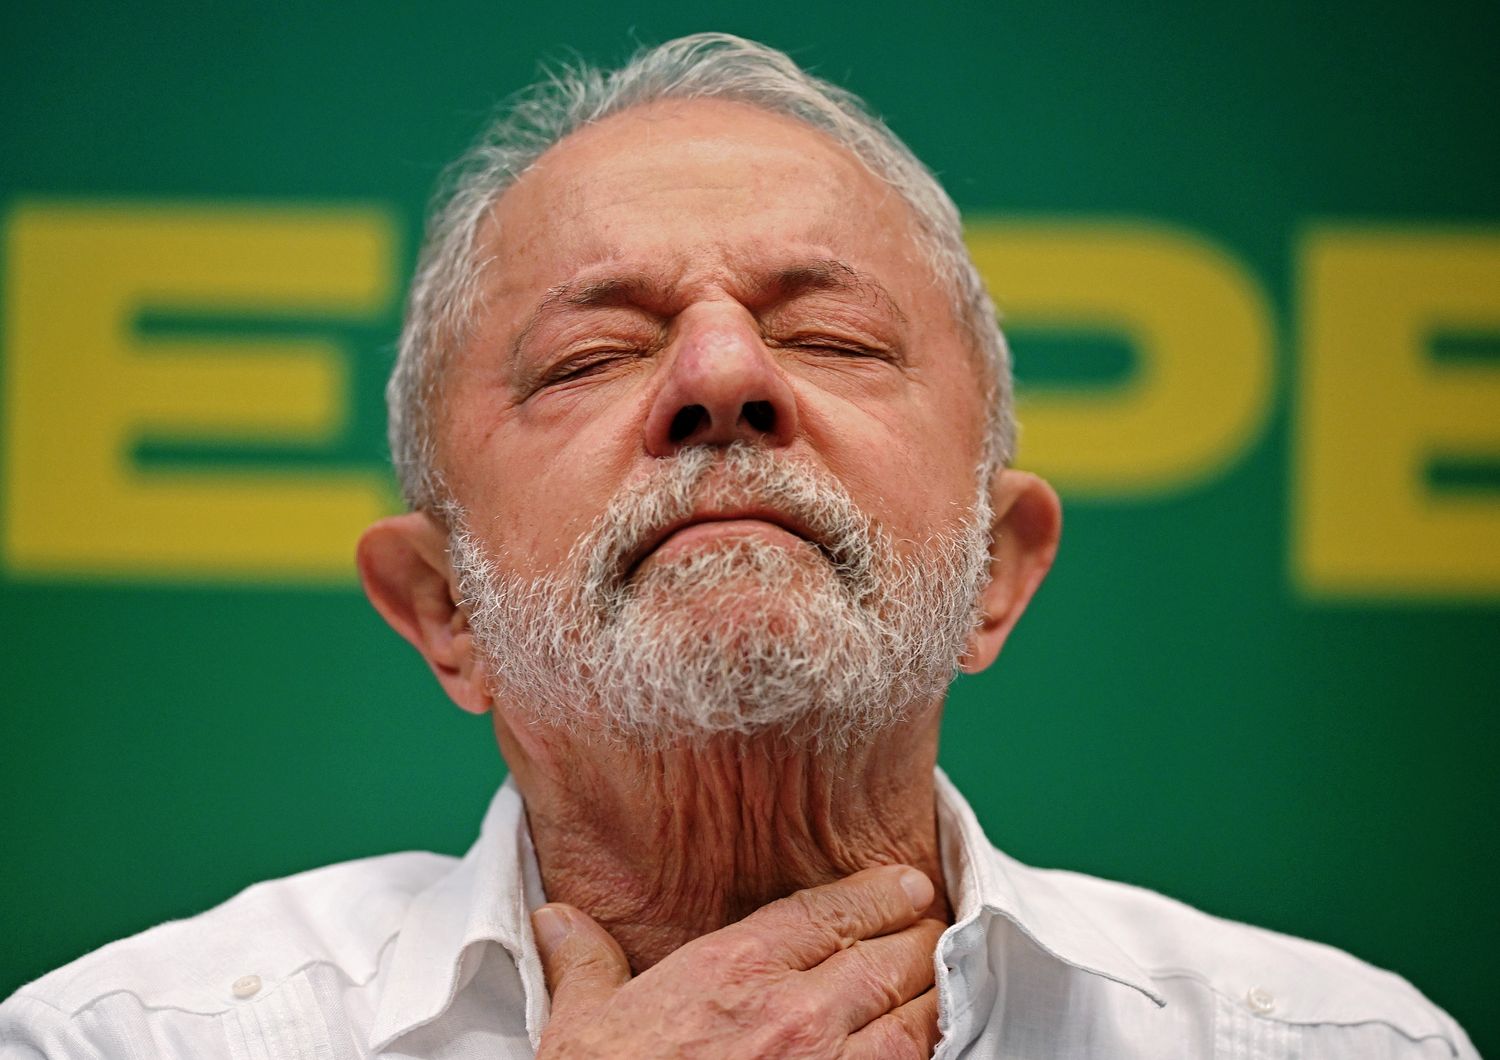 Inacio Lula da Silva